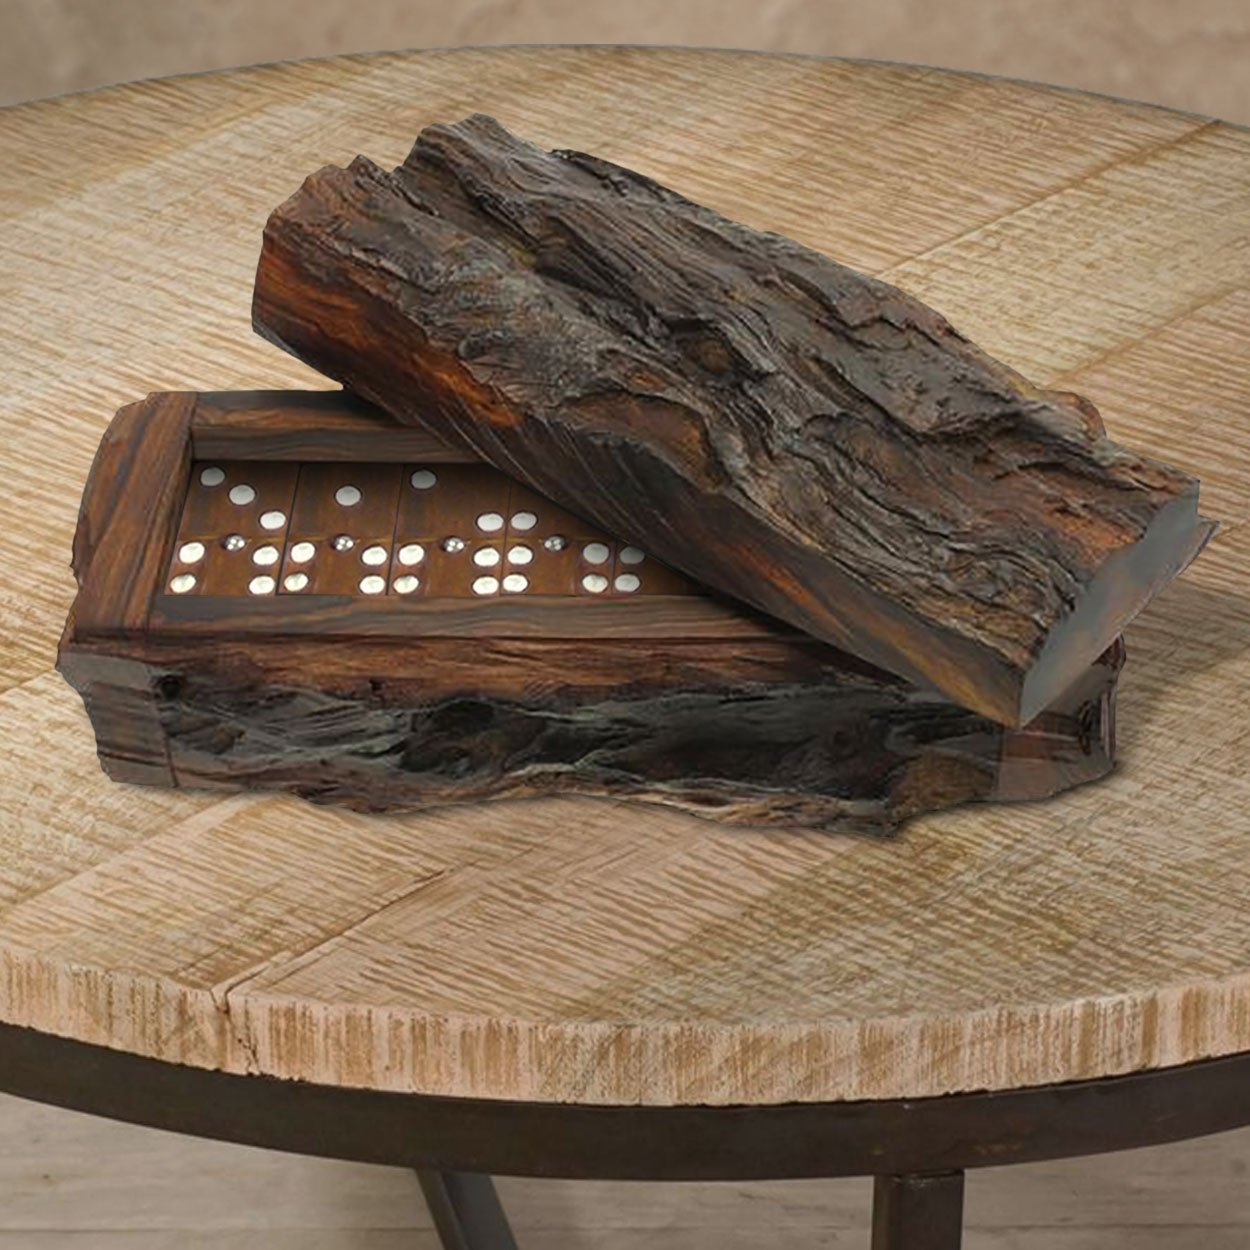 172061 - Rustic Log Ironwood Dominoes Set